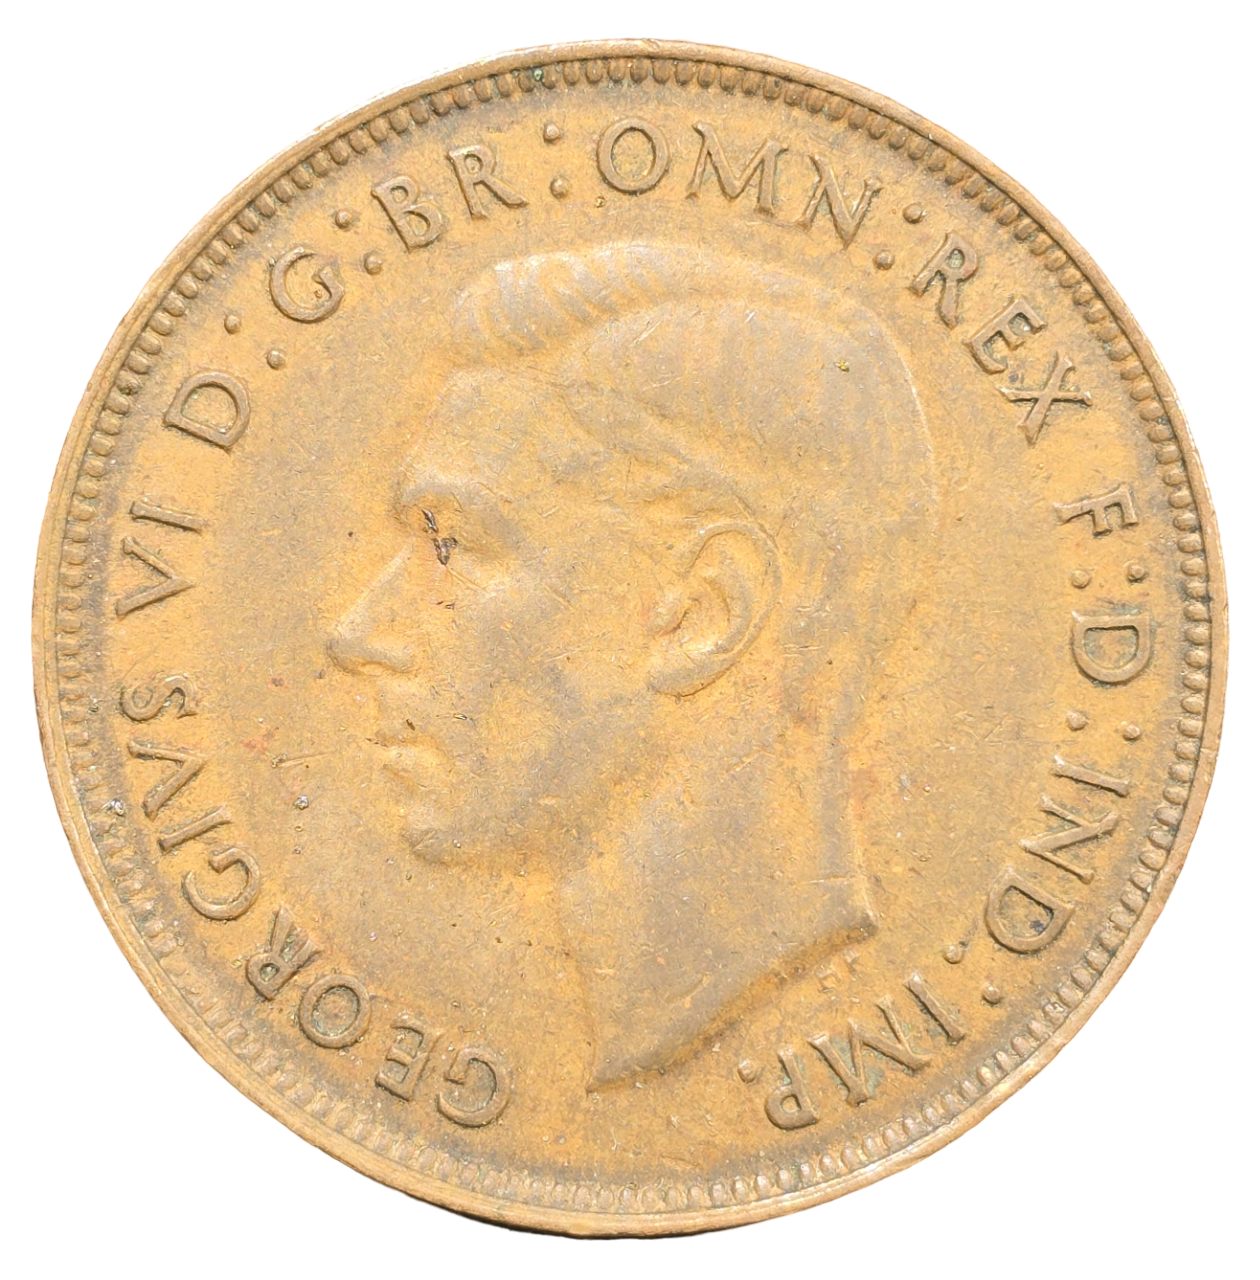 1946 Australian Penny - Considered scarce -  Fine